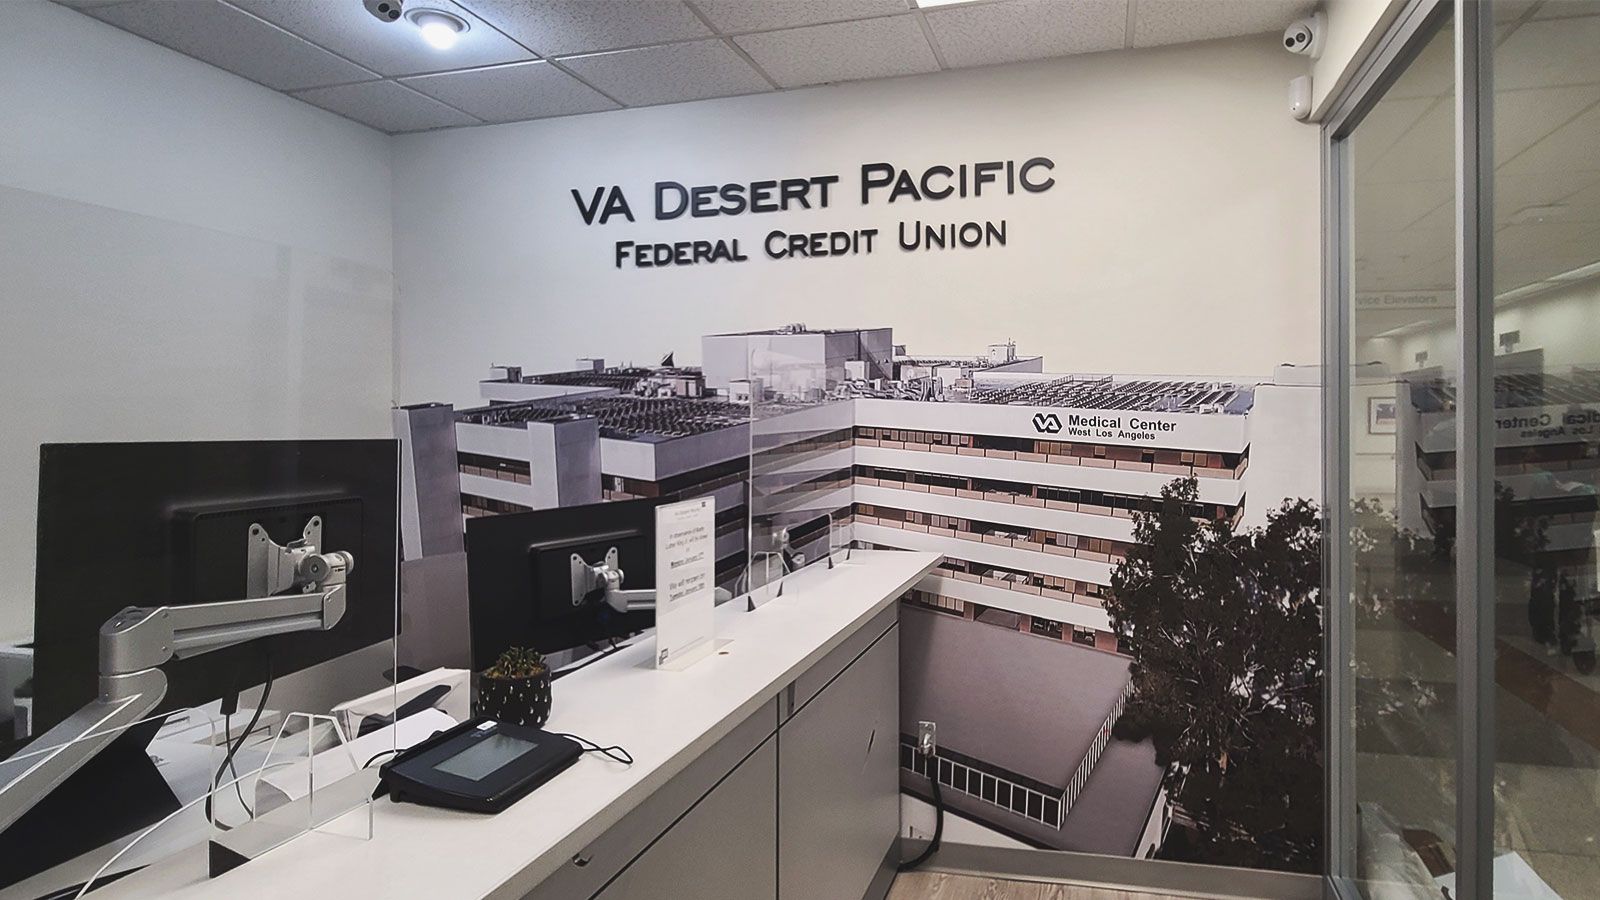 VA Desert Pacific office sign